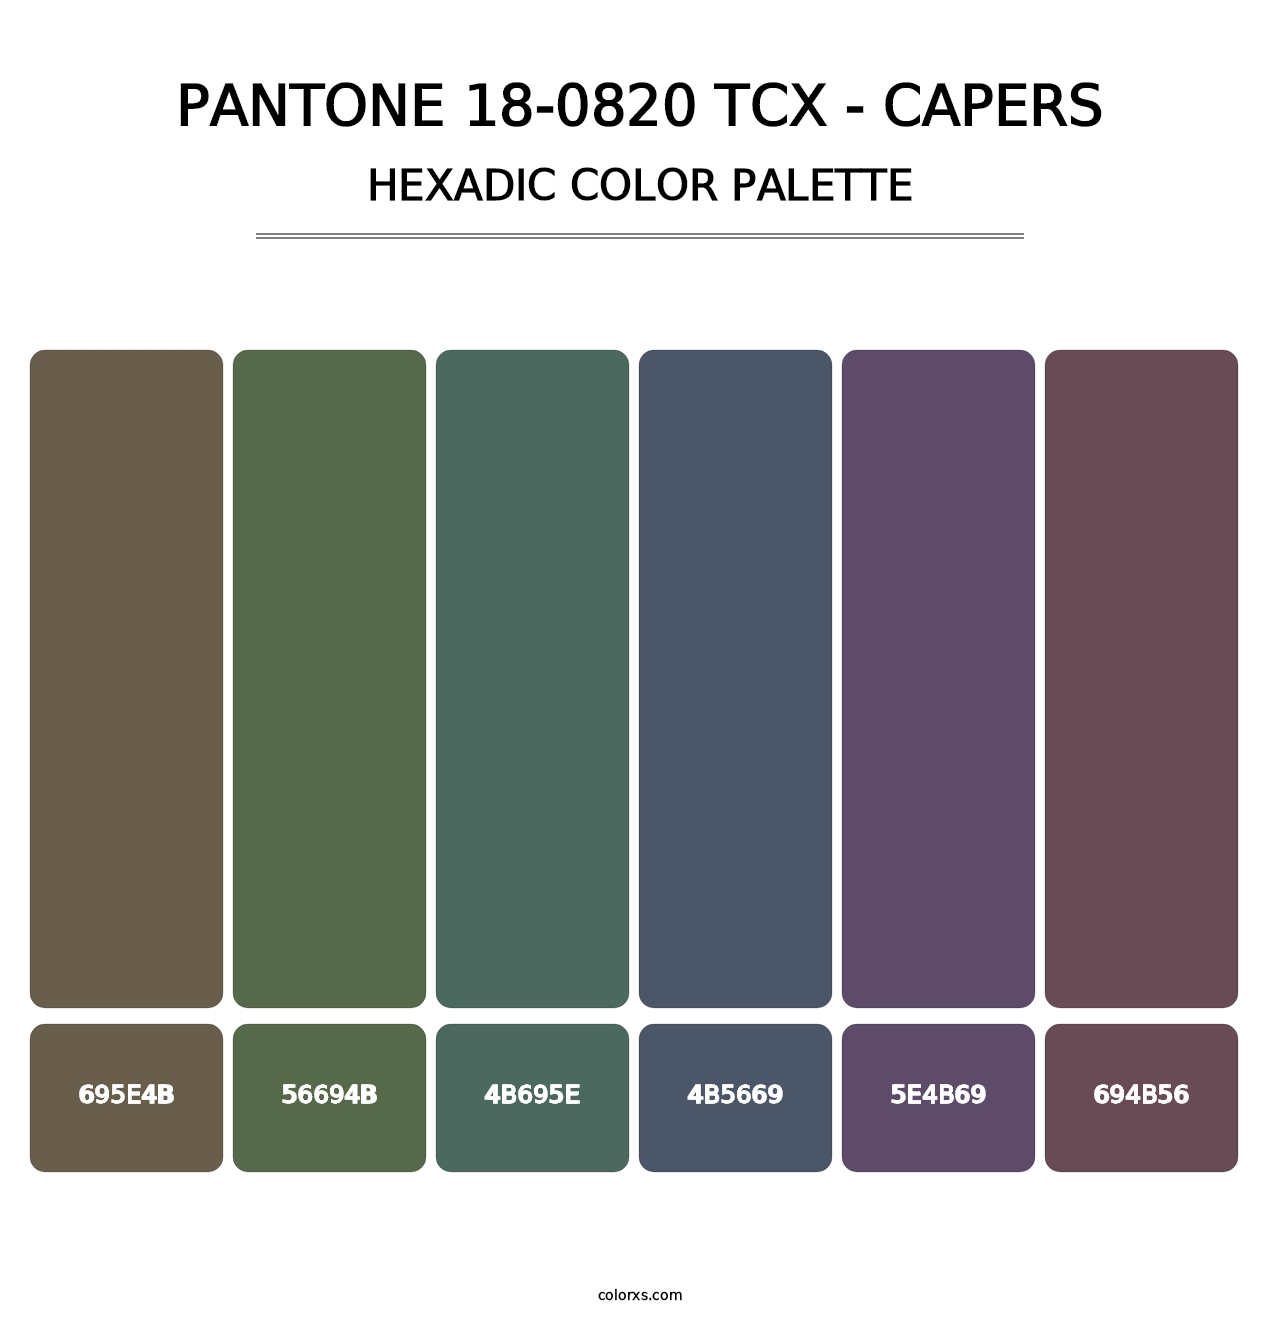 PANTONE 18-0820 TCX - Capers - Hexadic Color Palette